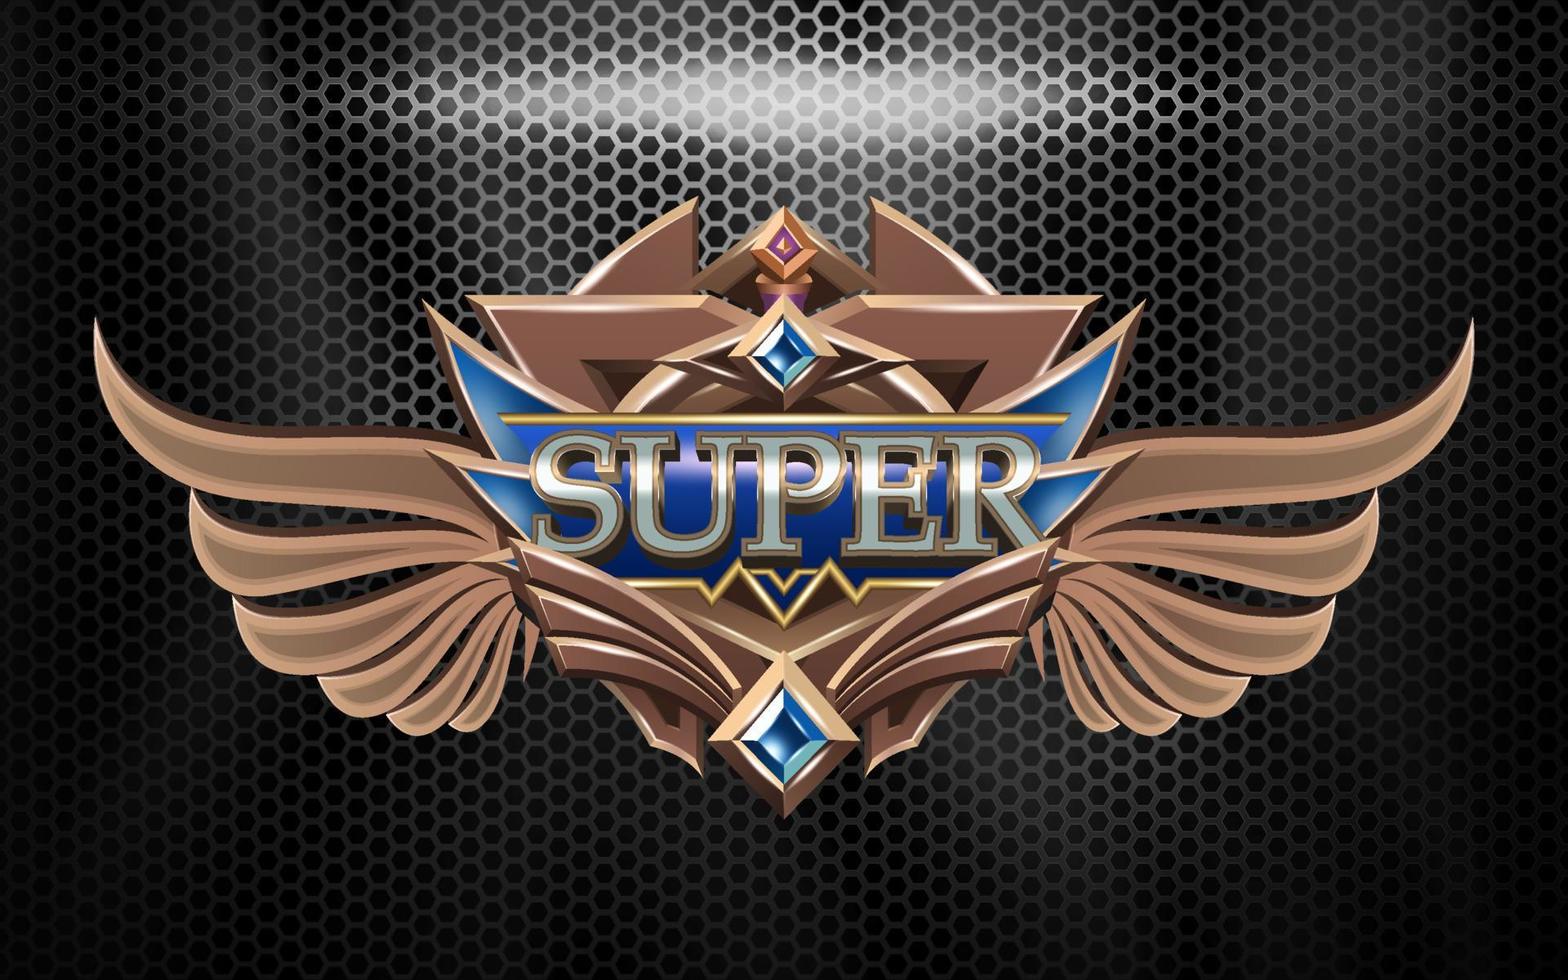 Super Esport Team Logo 3d Text Effect with Winged Emblem vector